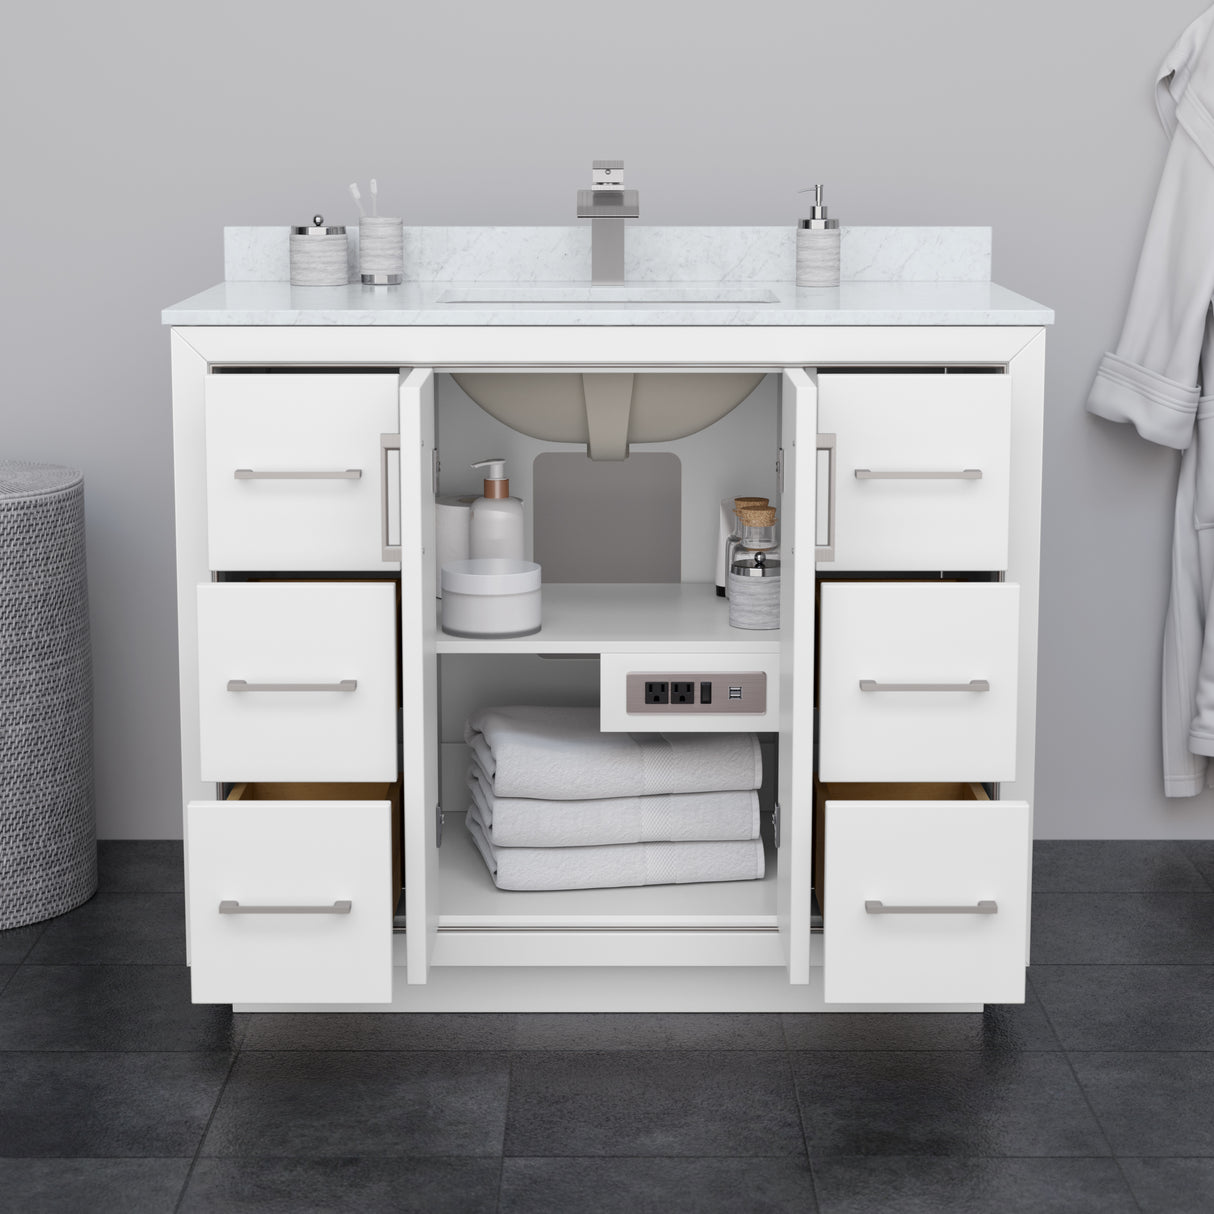 Icon 42 Inch Single Bathroom Vanity in White Carrara Cultured Marble Countertop Undermount Square Sink Matte Black Trim